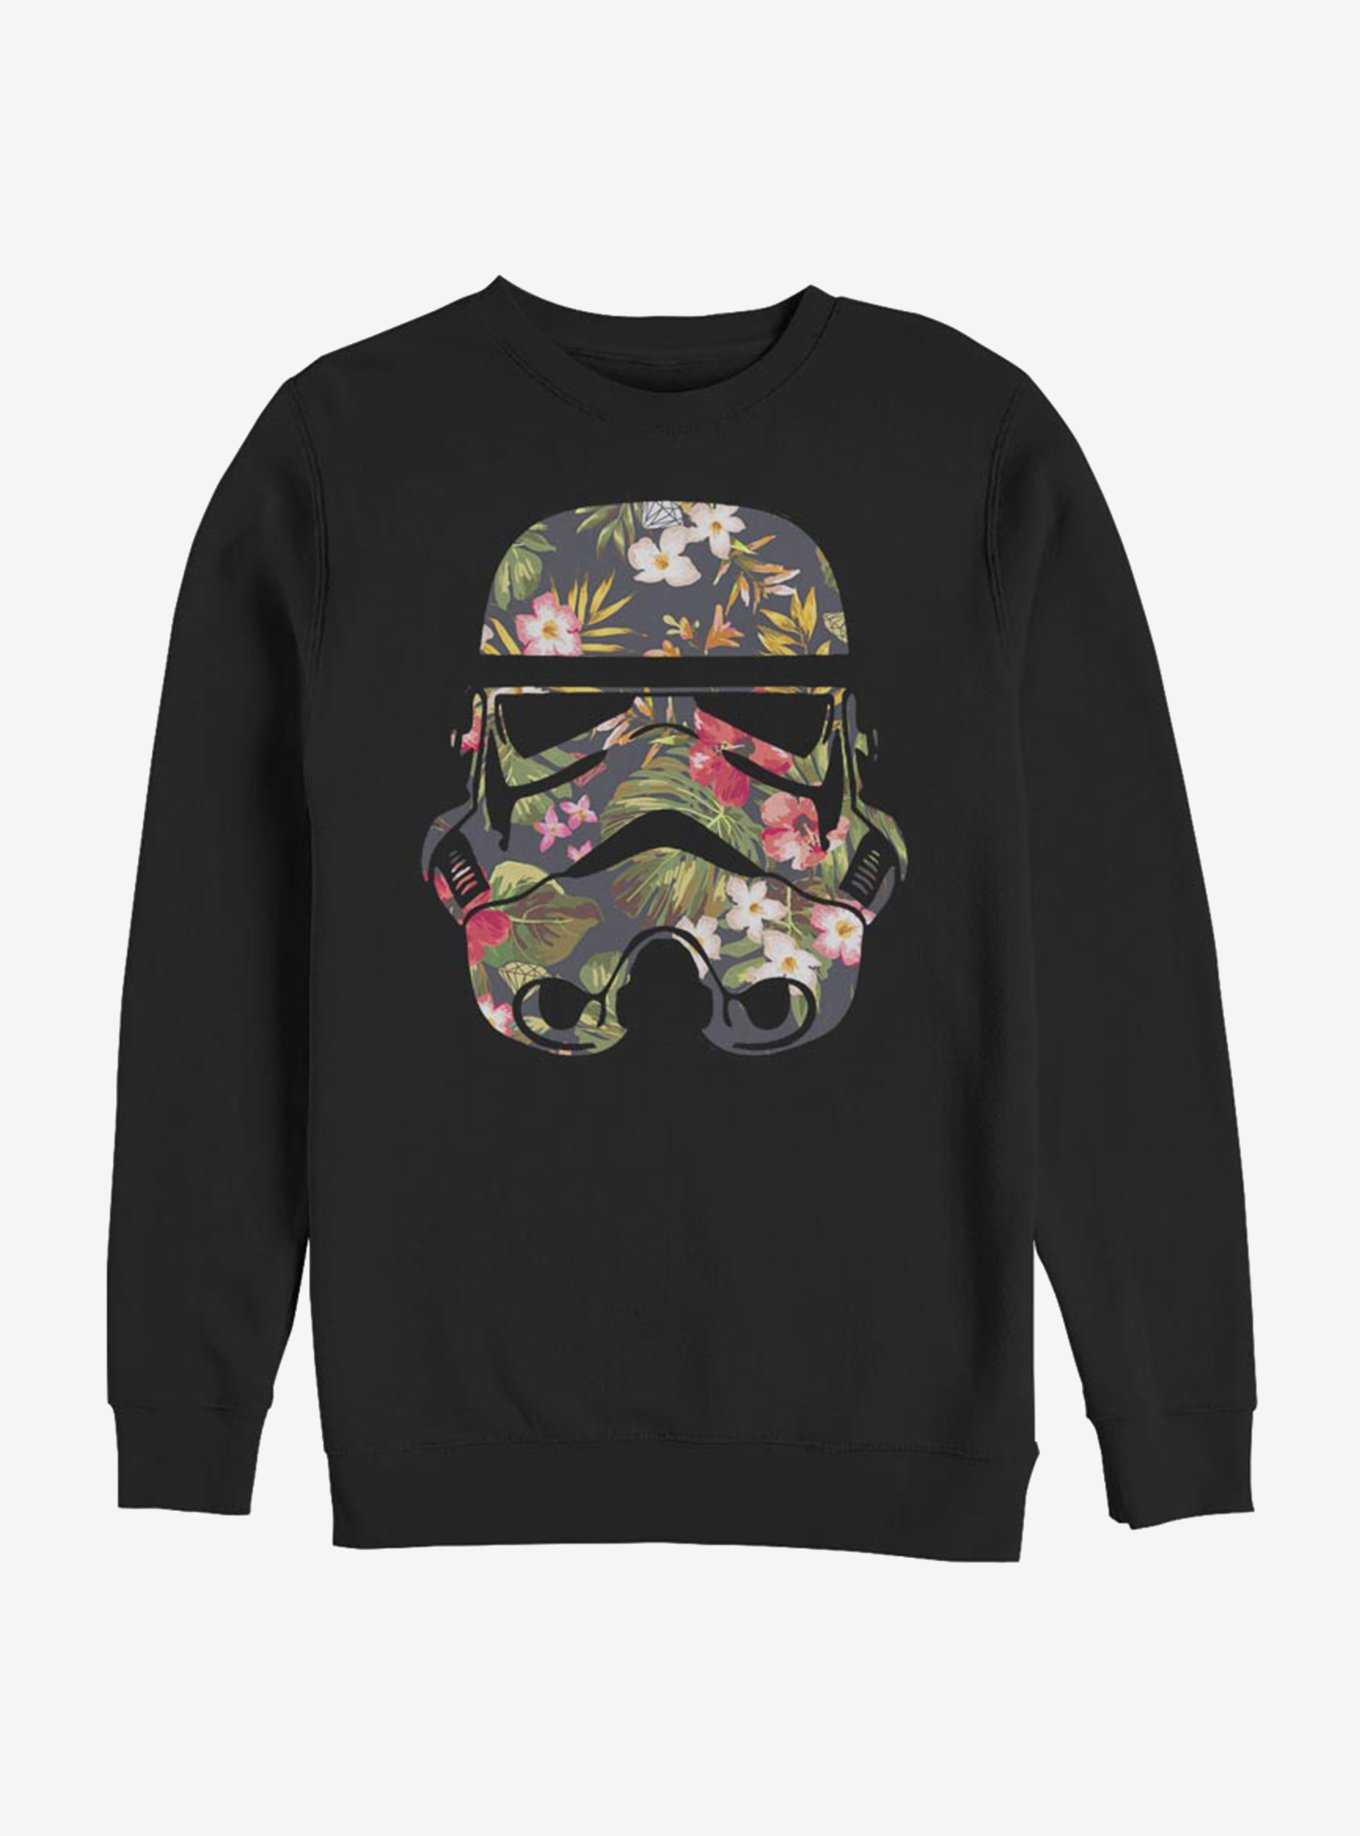 Star Wars Storm Flowers Sweatshirt, , hi-res